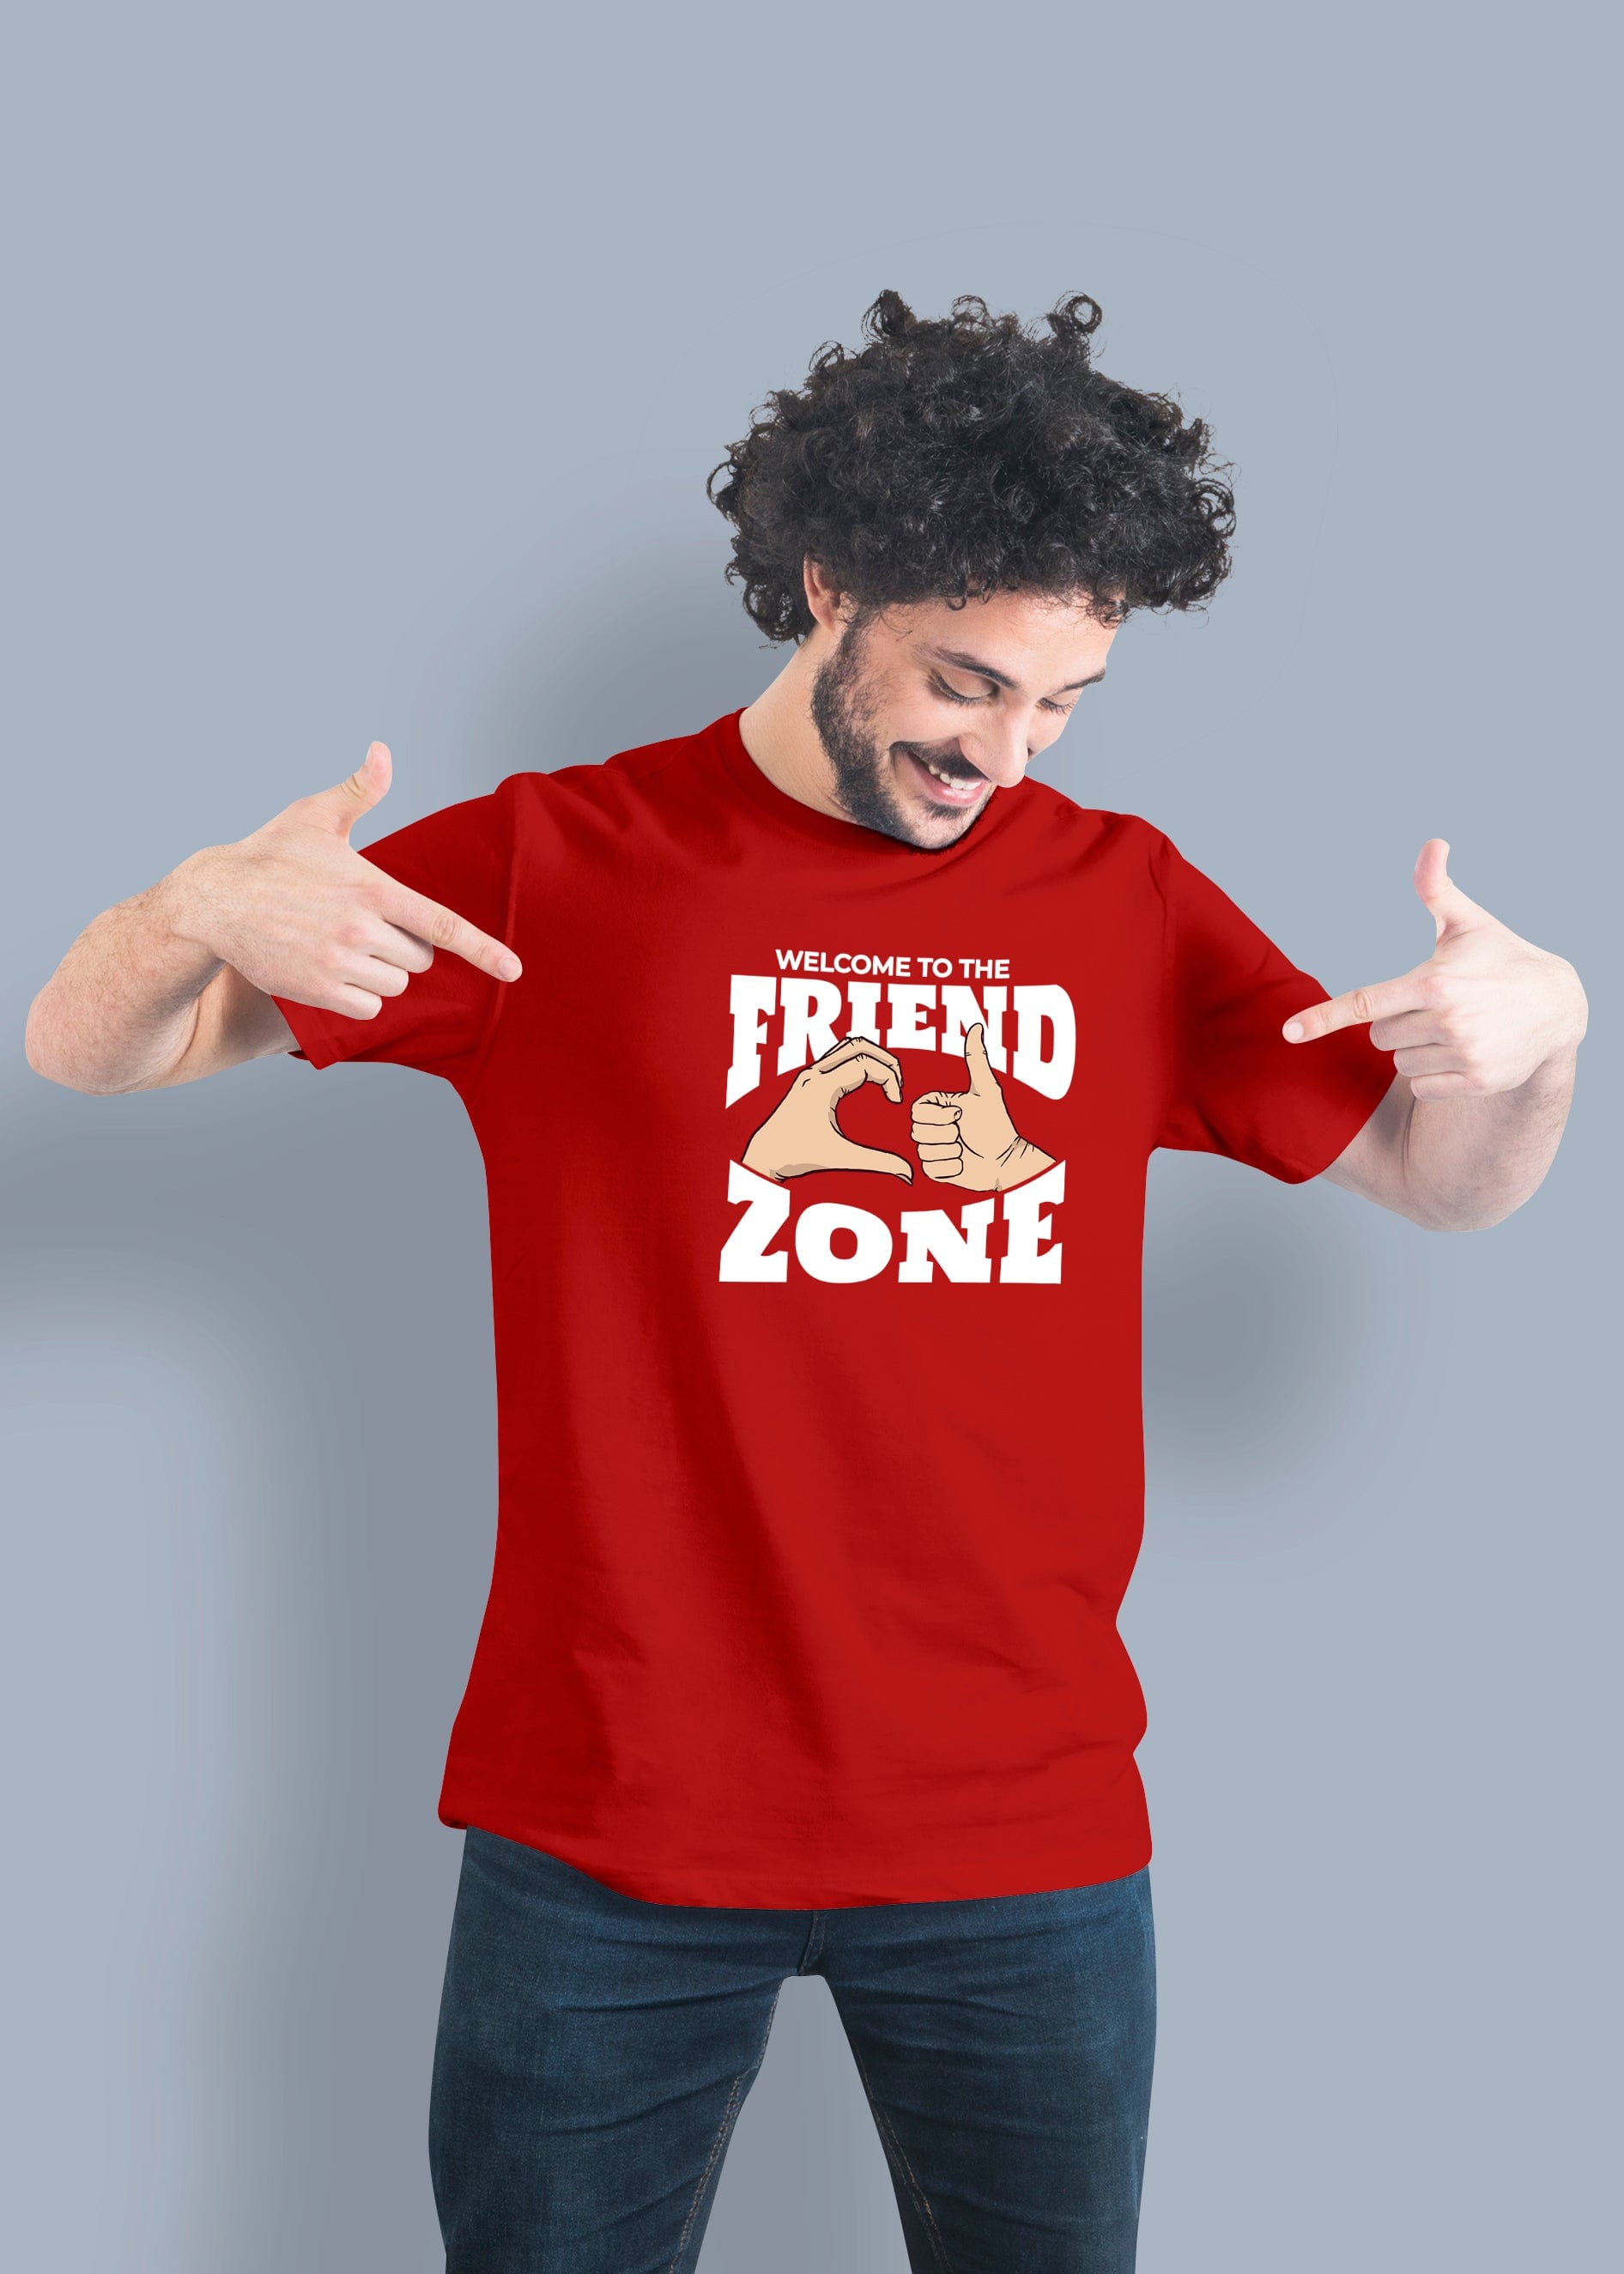 Friend Zone Printed Half Sleeve Premium Cotton T-shirt For Men